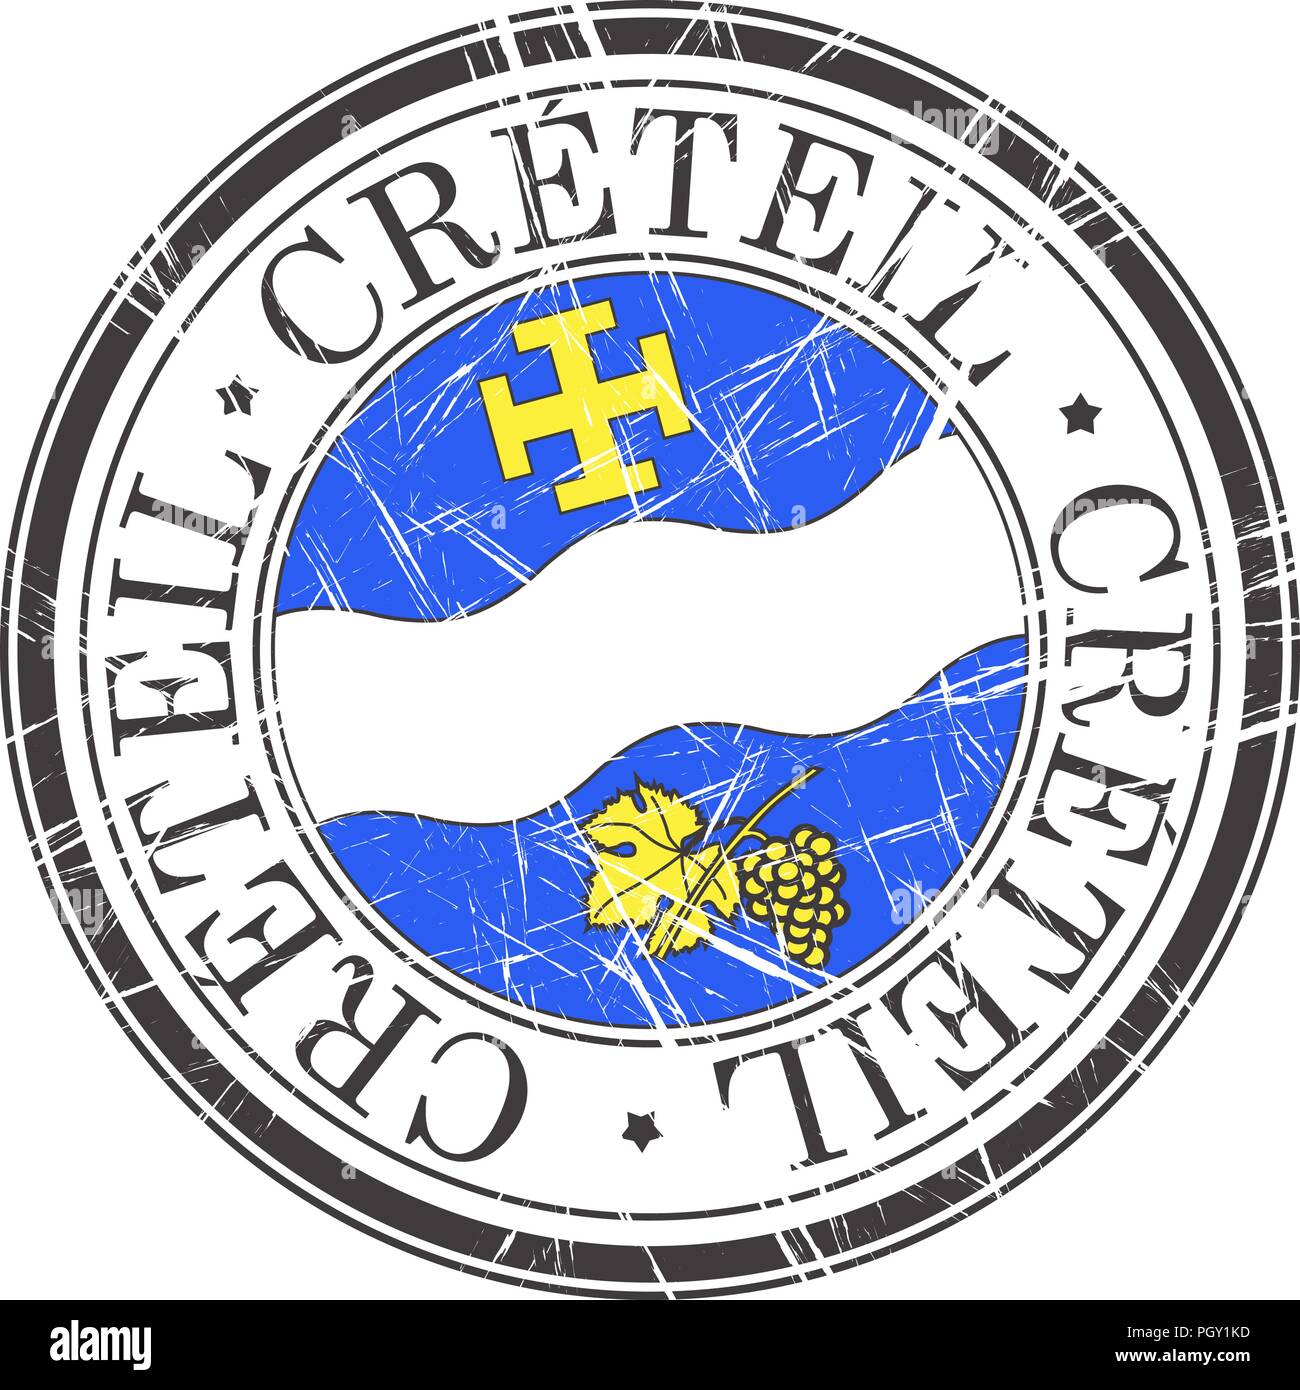 Creteil city grunge rubber stamp on white Stock Vector